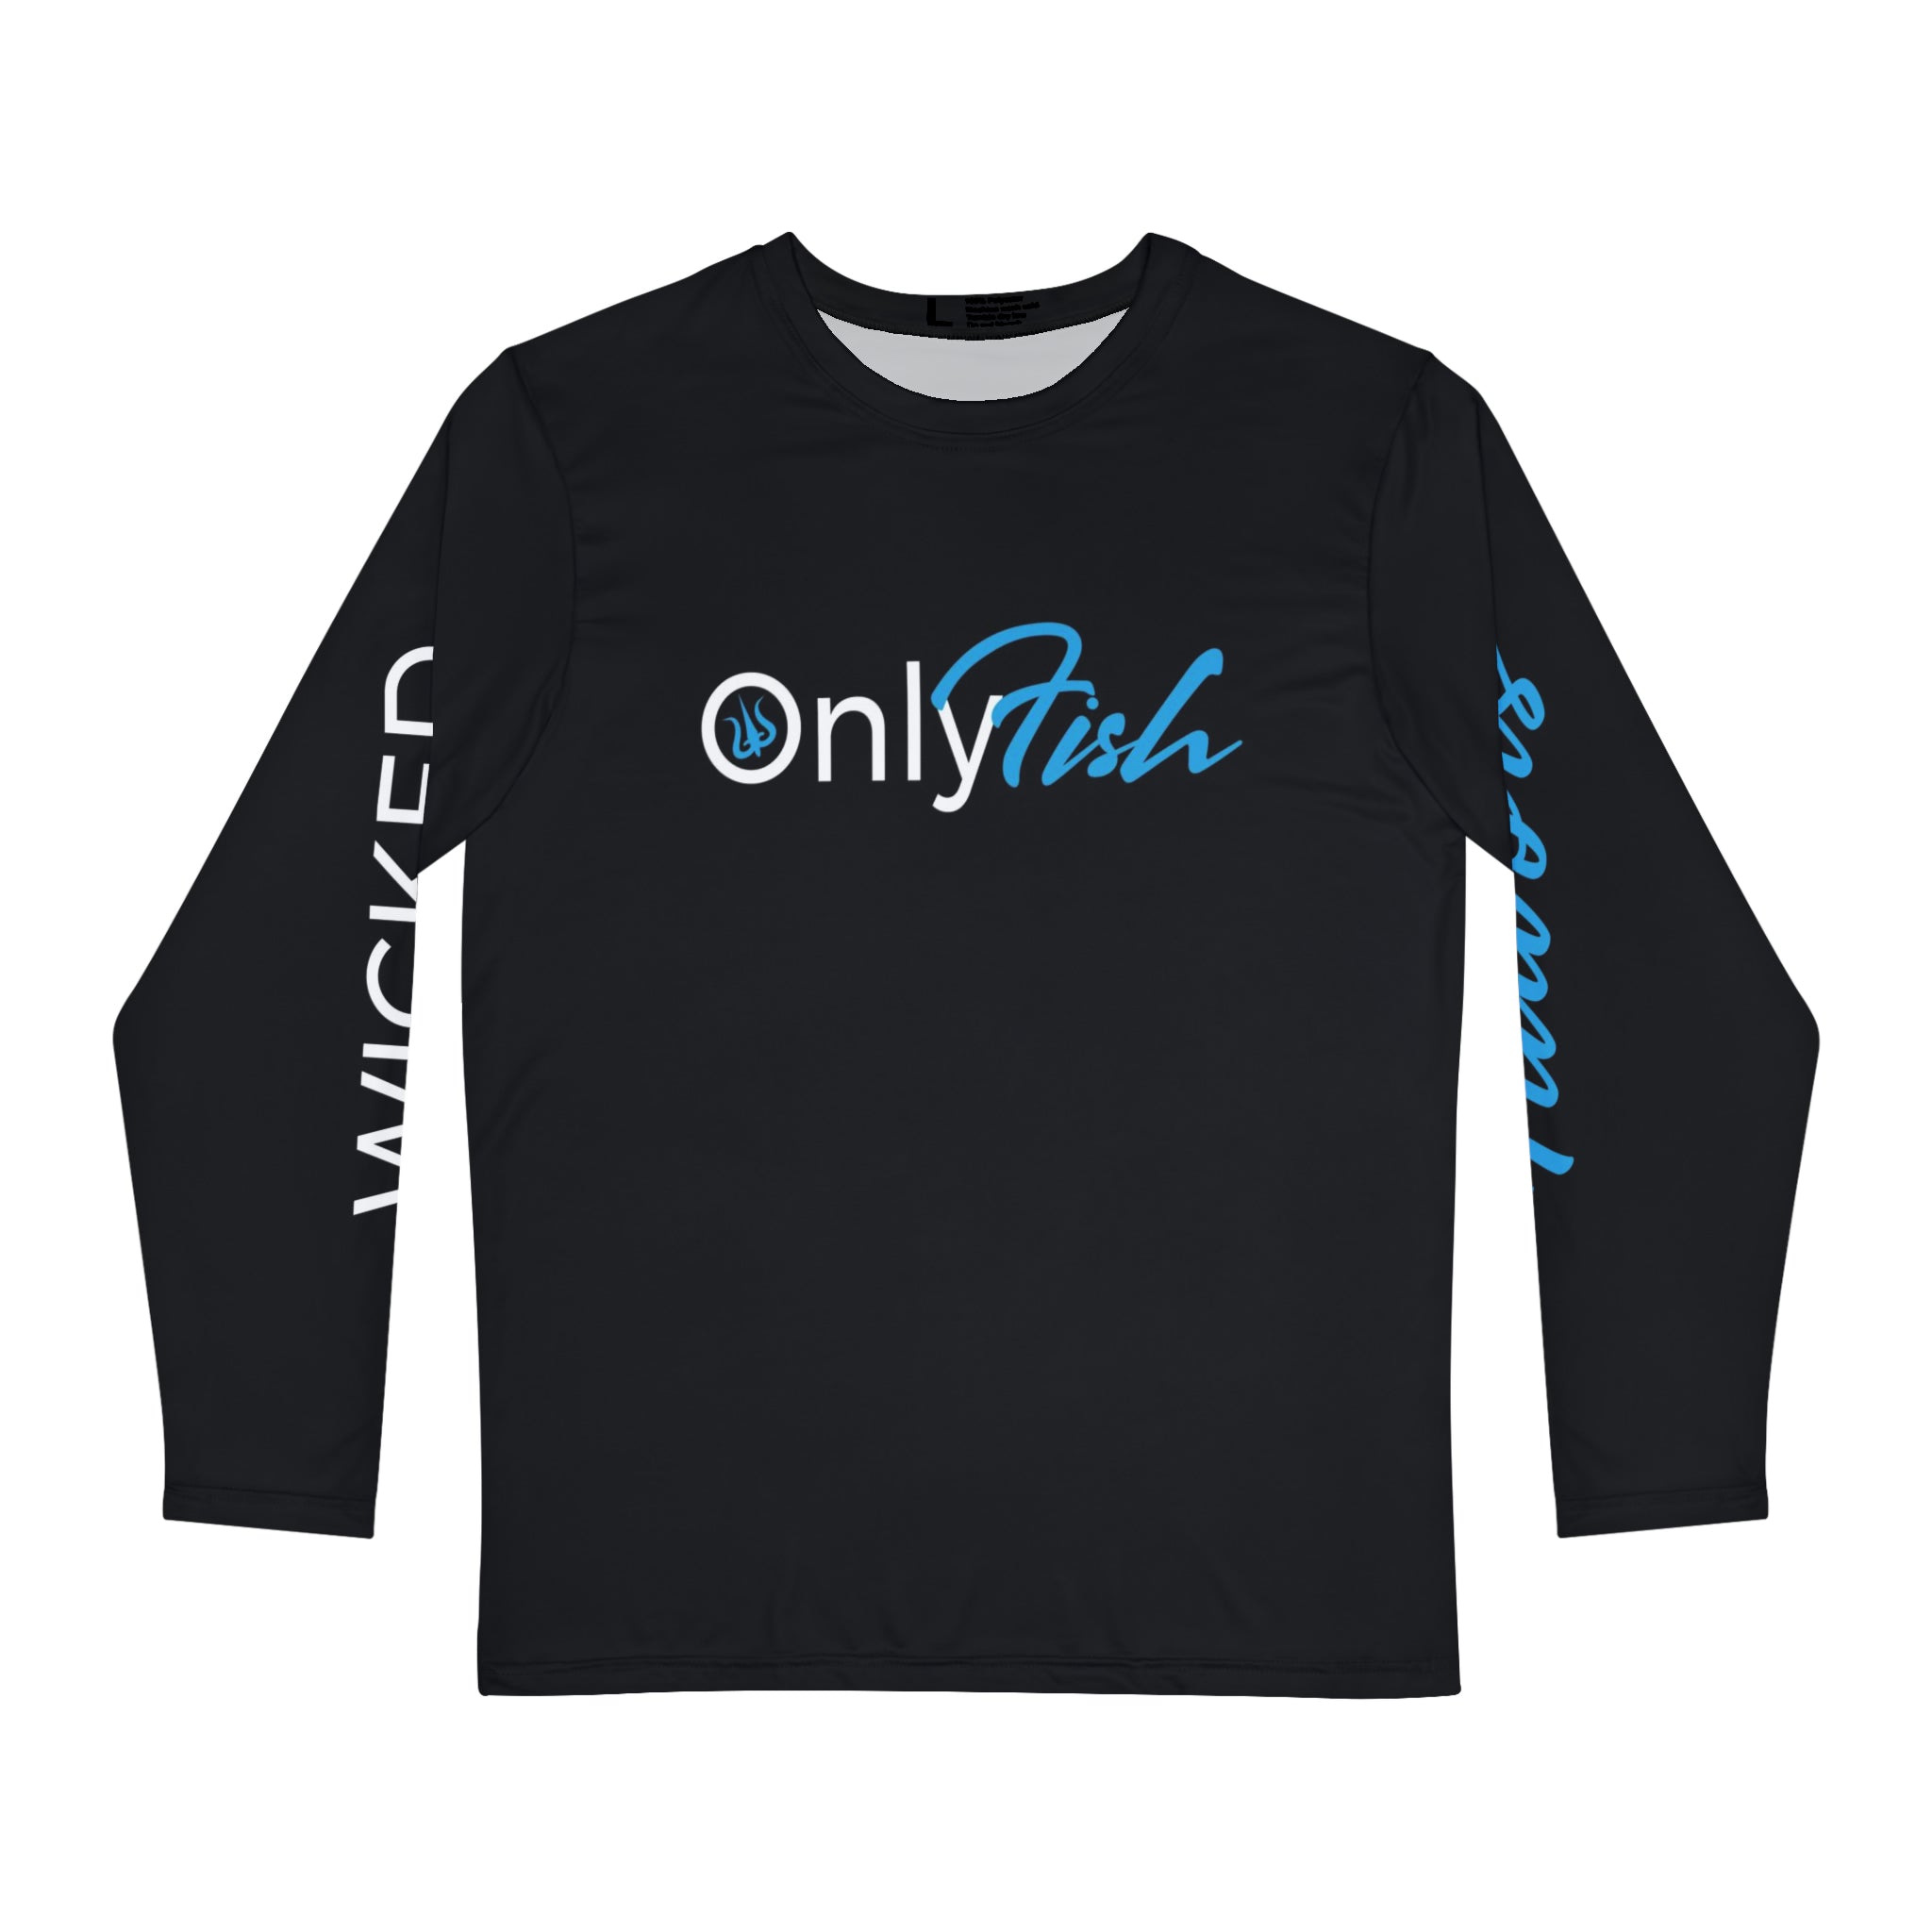 Only Fish, high performance spf50 shirt